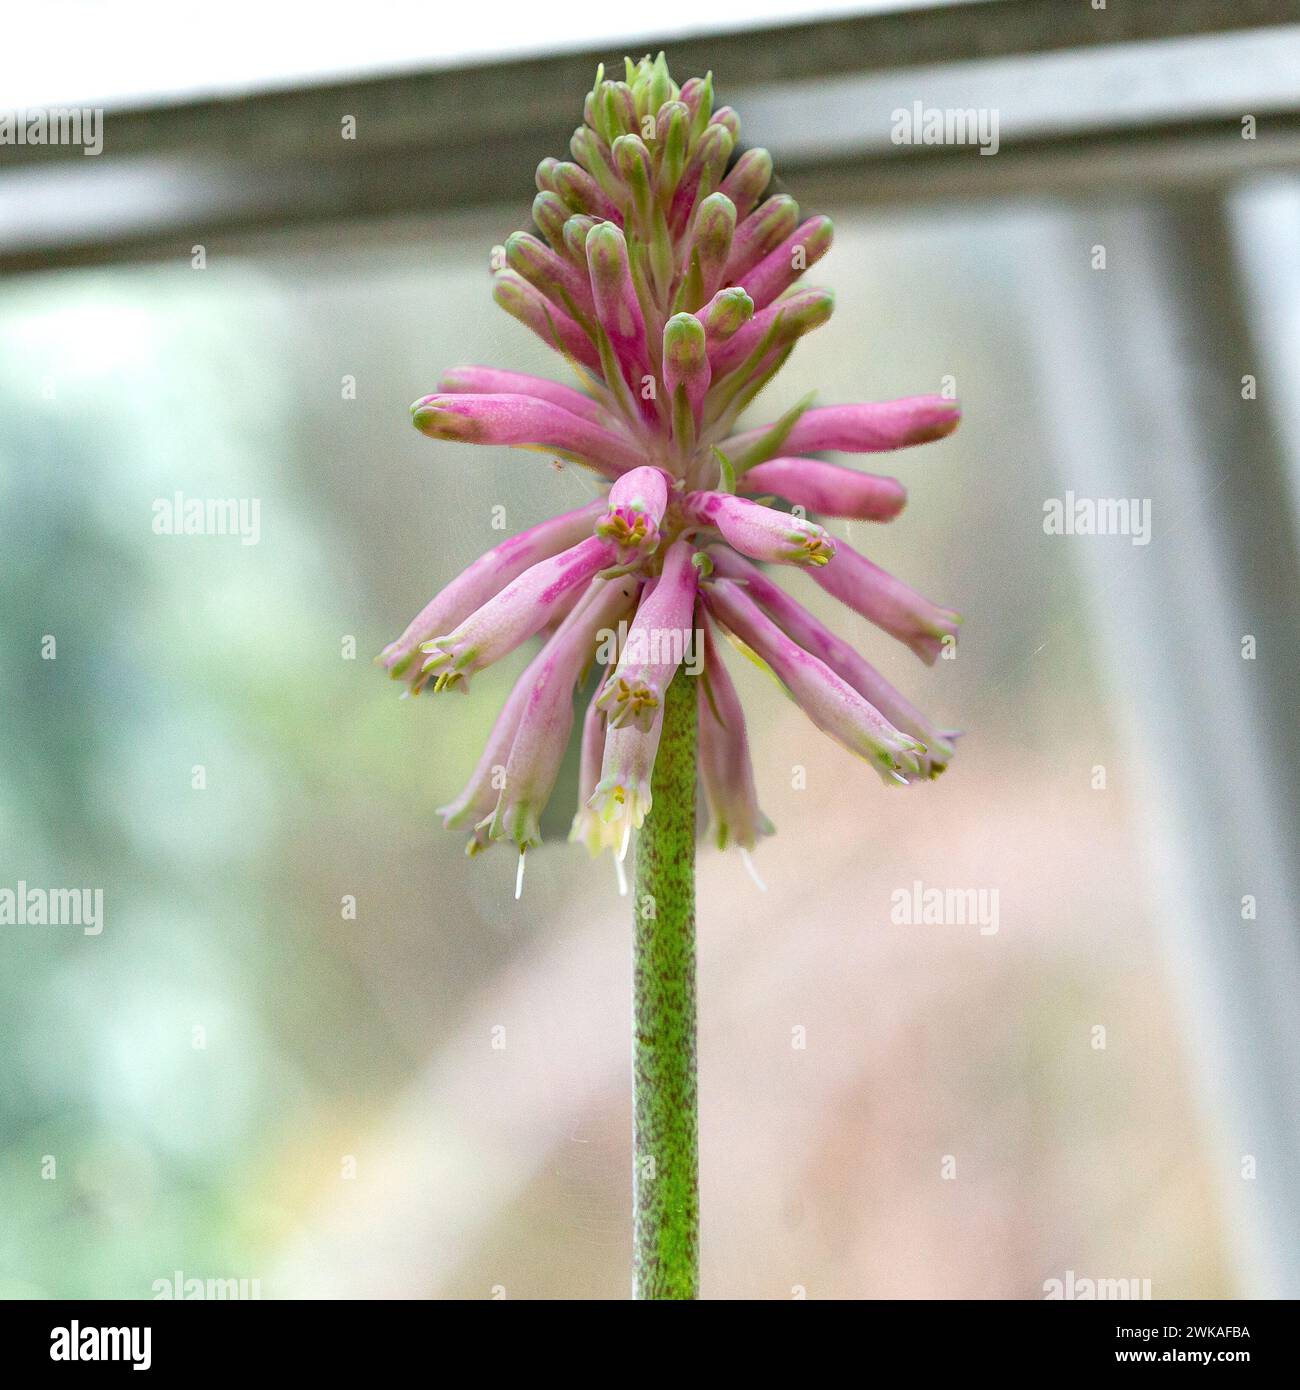 Veltheimia Bracteata (Forest Lily) opening flower. Stock Photo